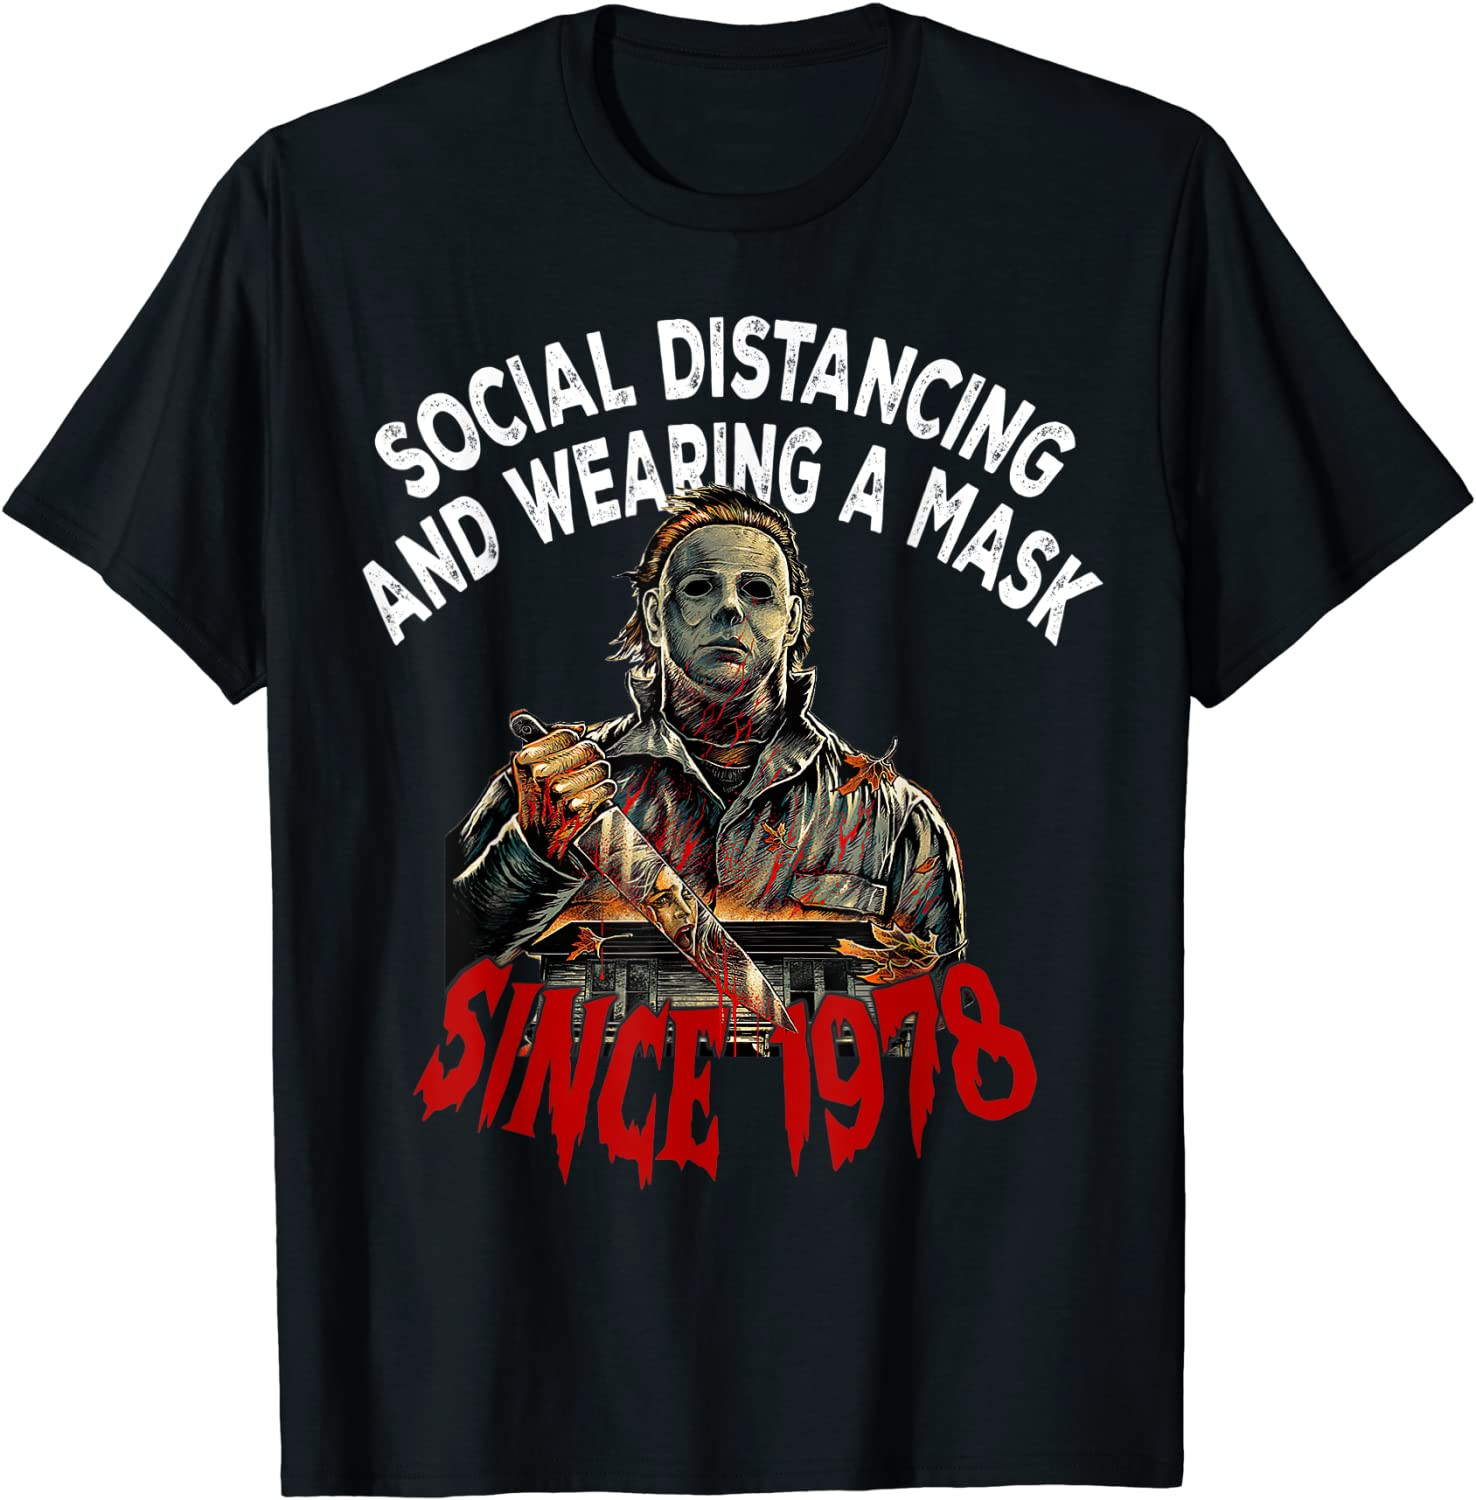 Social Distancing & Wearing A Horror Halloween Mask T-Shirt